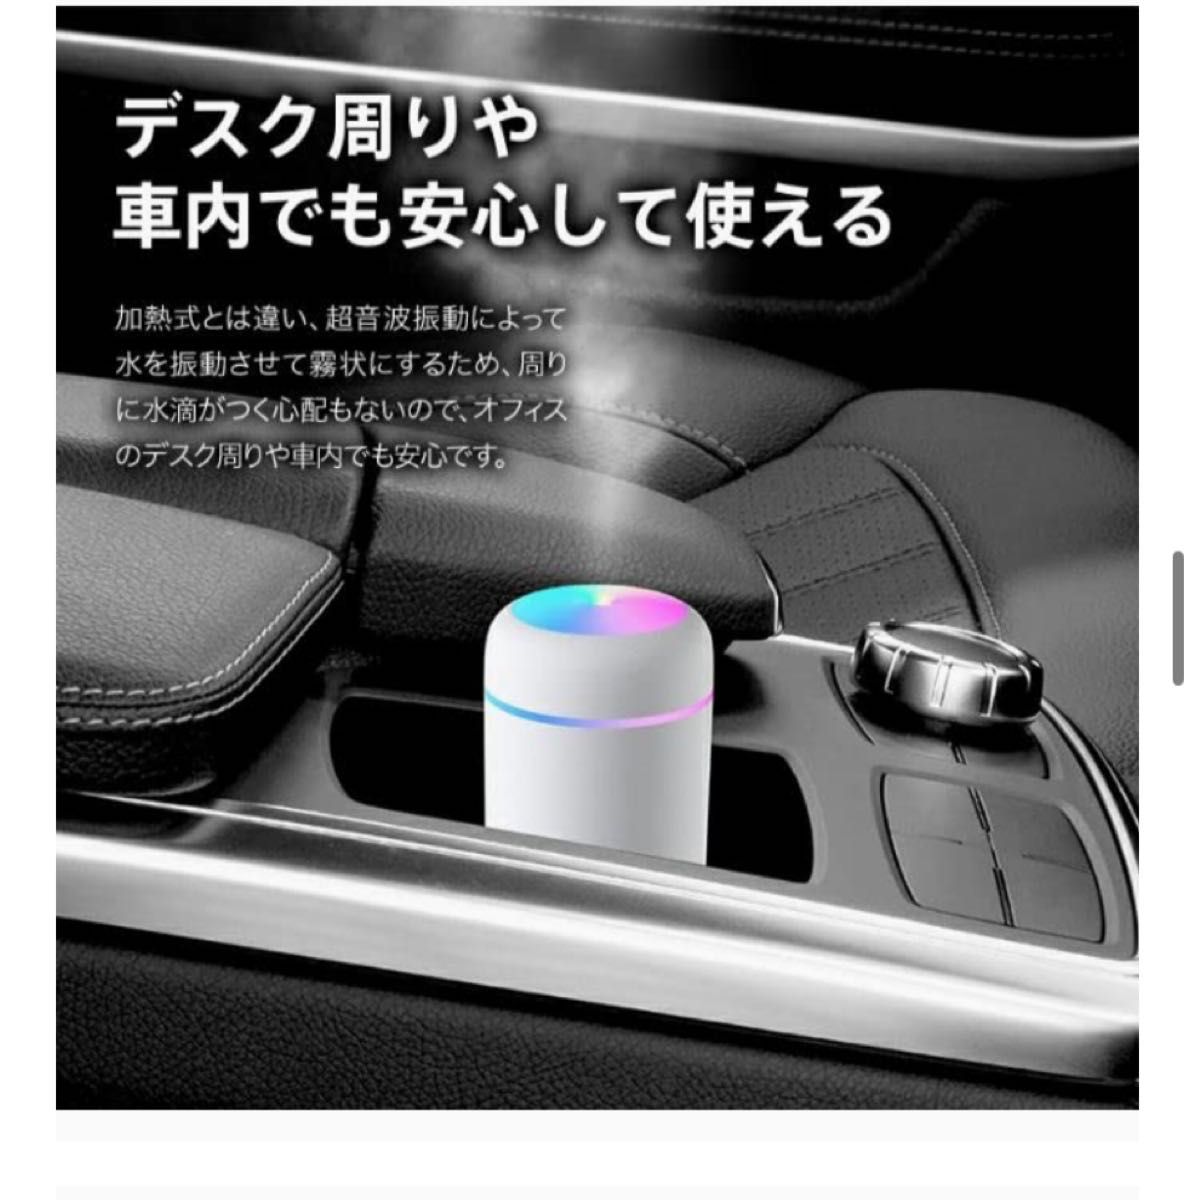 USB加湿器 超音波式 2タイプ噴射モード 車載 卓上 携帯 オフィス 寝室にも ディフューザー 空気洗浄機 (ピンク)